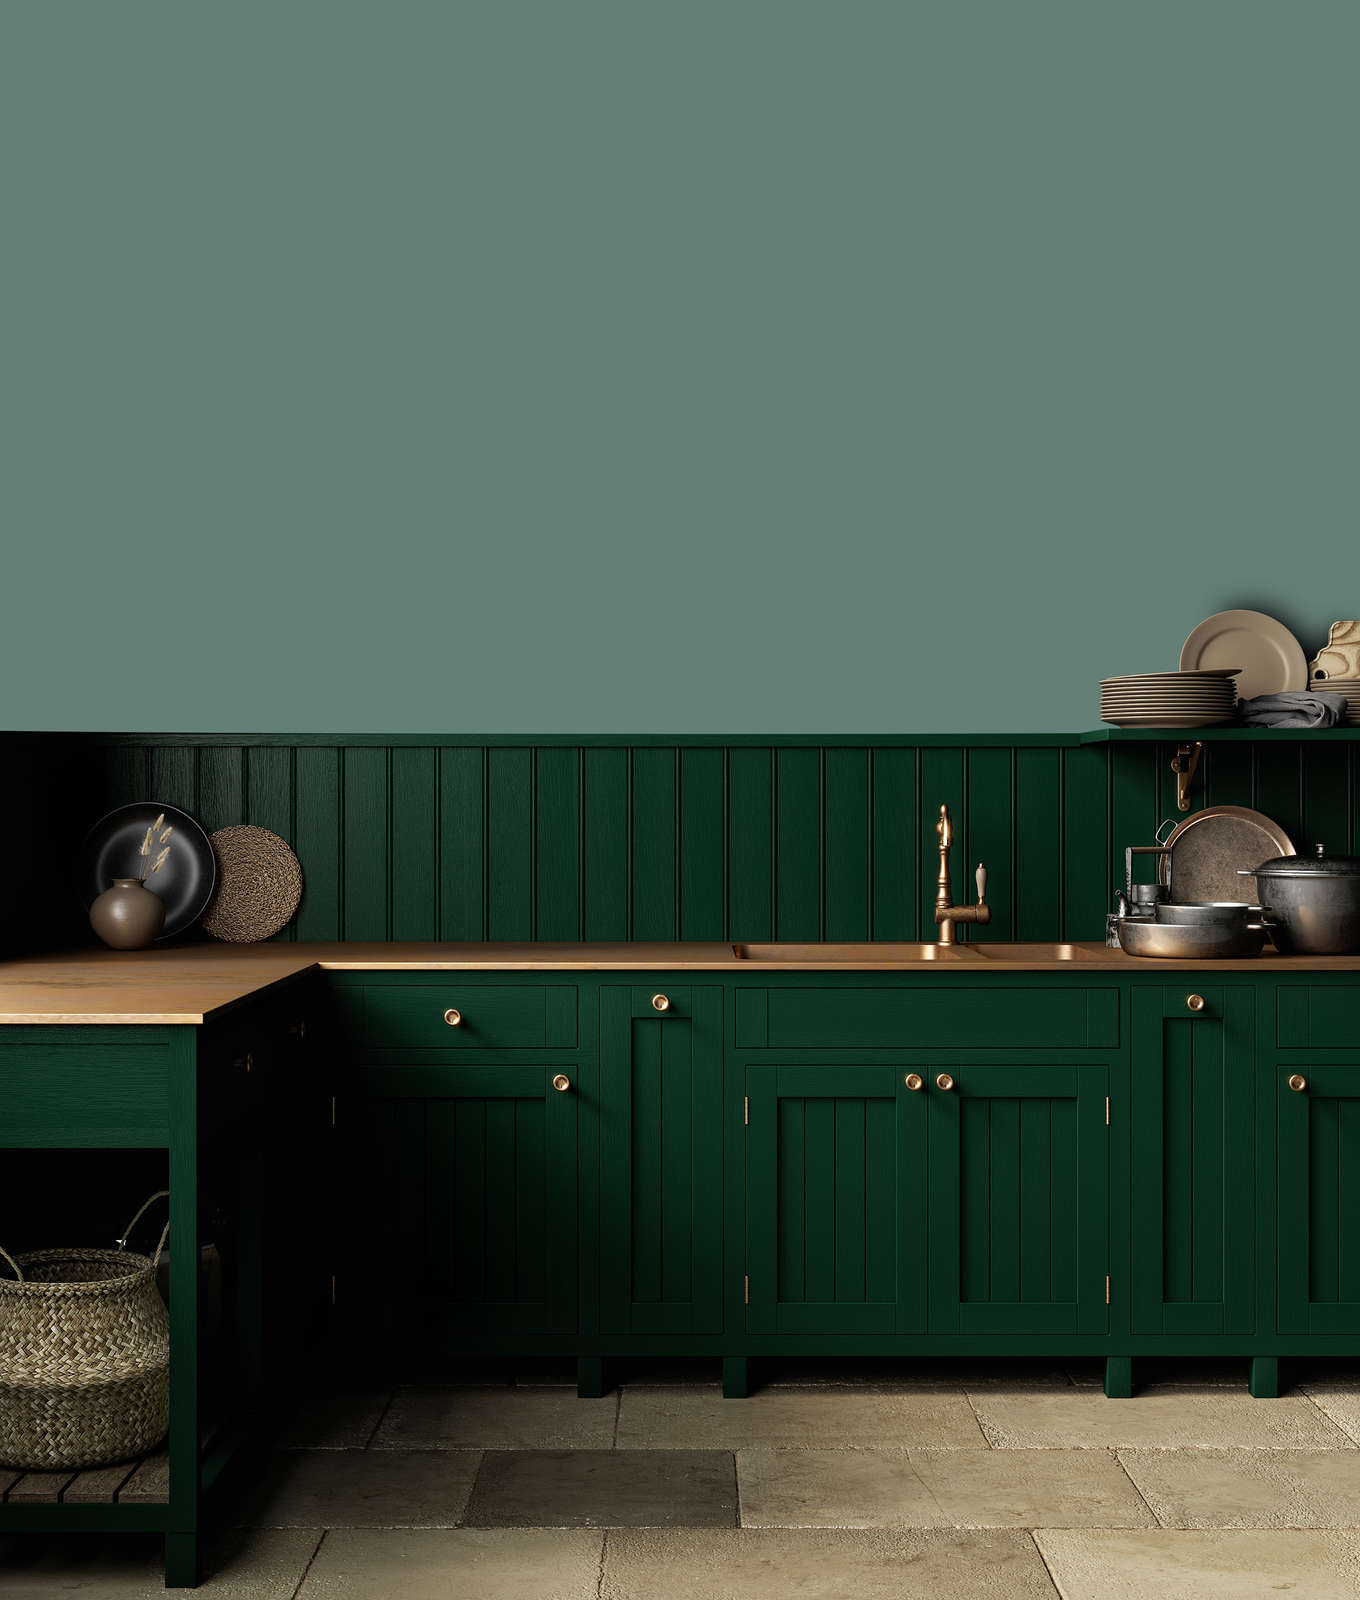             Premium Wall Paint Calm Eucalyptus »Expressive Emerald« NW410 – 2.5 litre
        